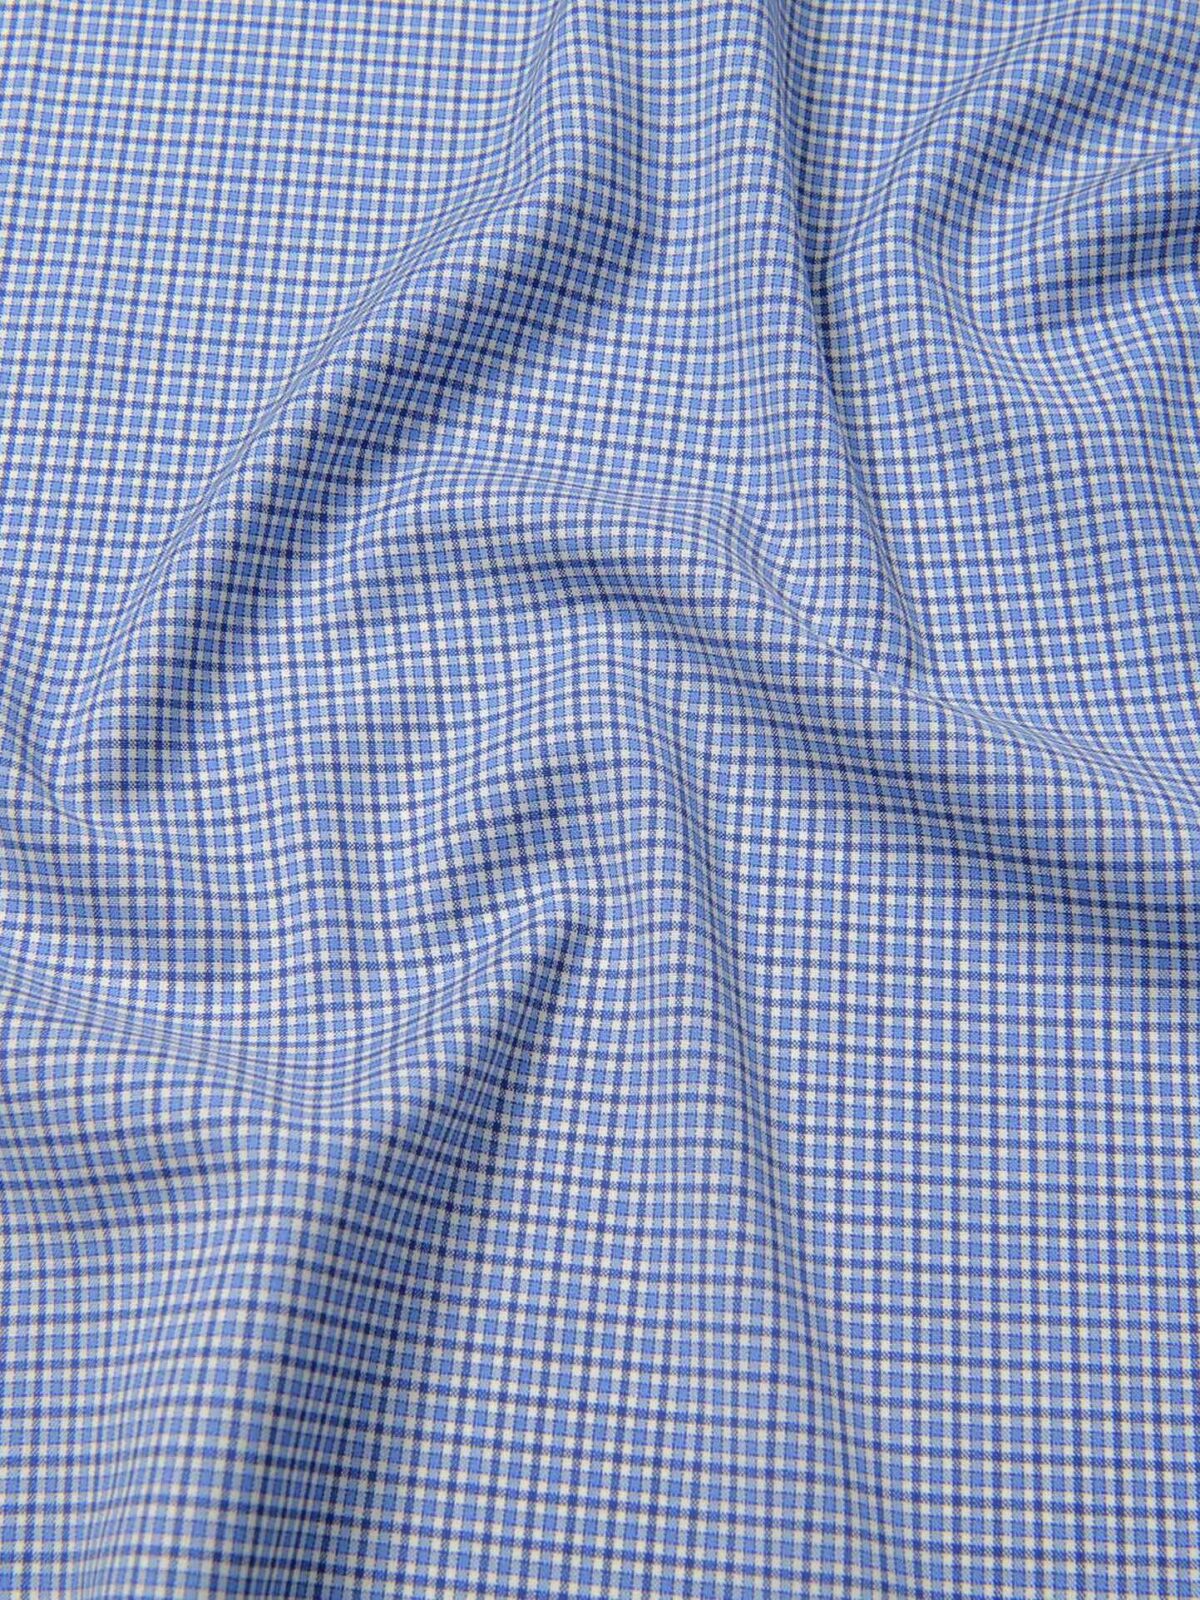 Reda Light Blue Small Check Merino Wool Shirts by Proper Cloth